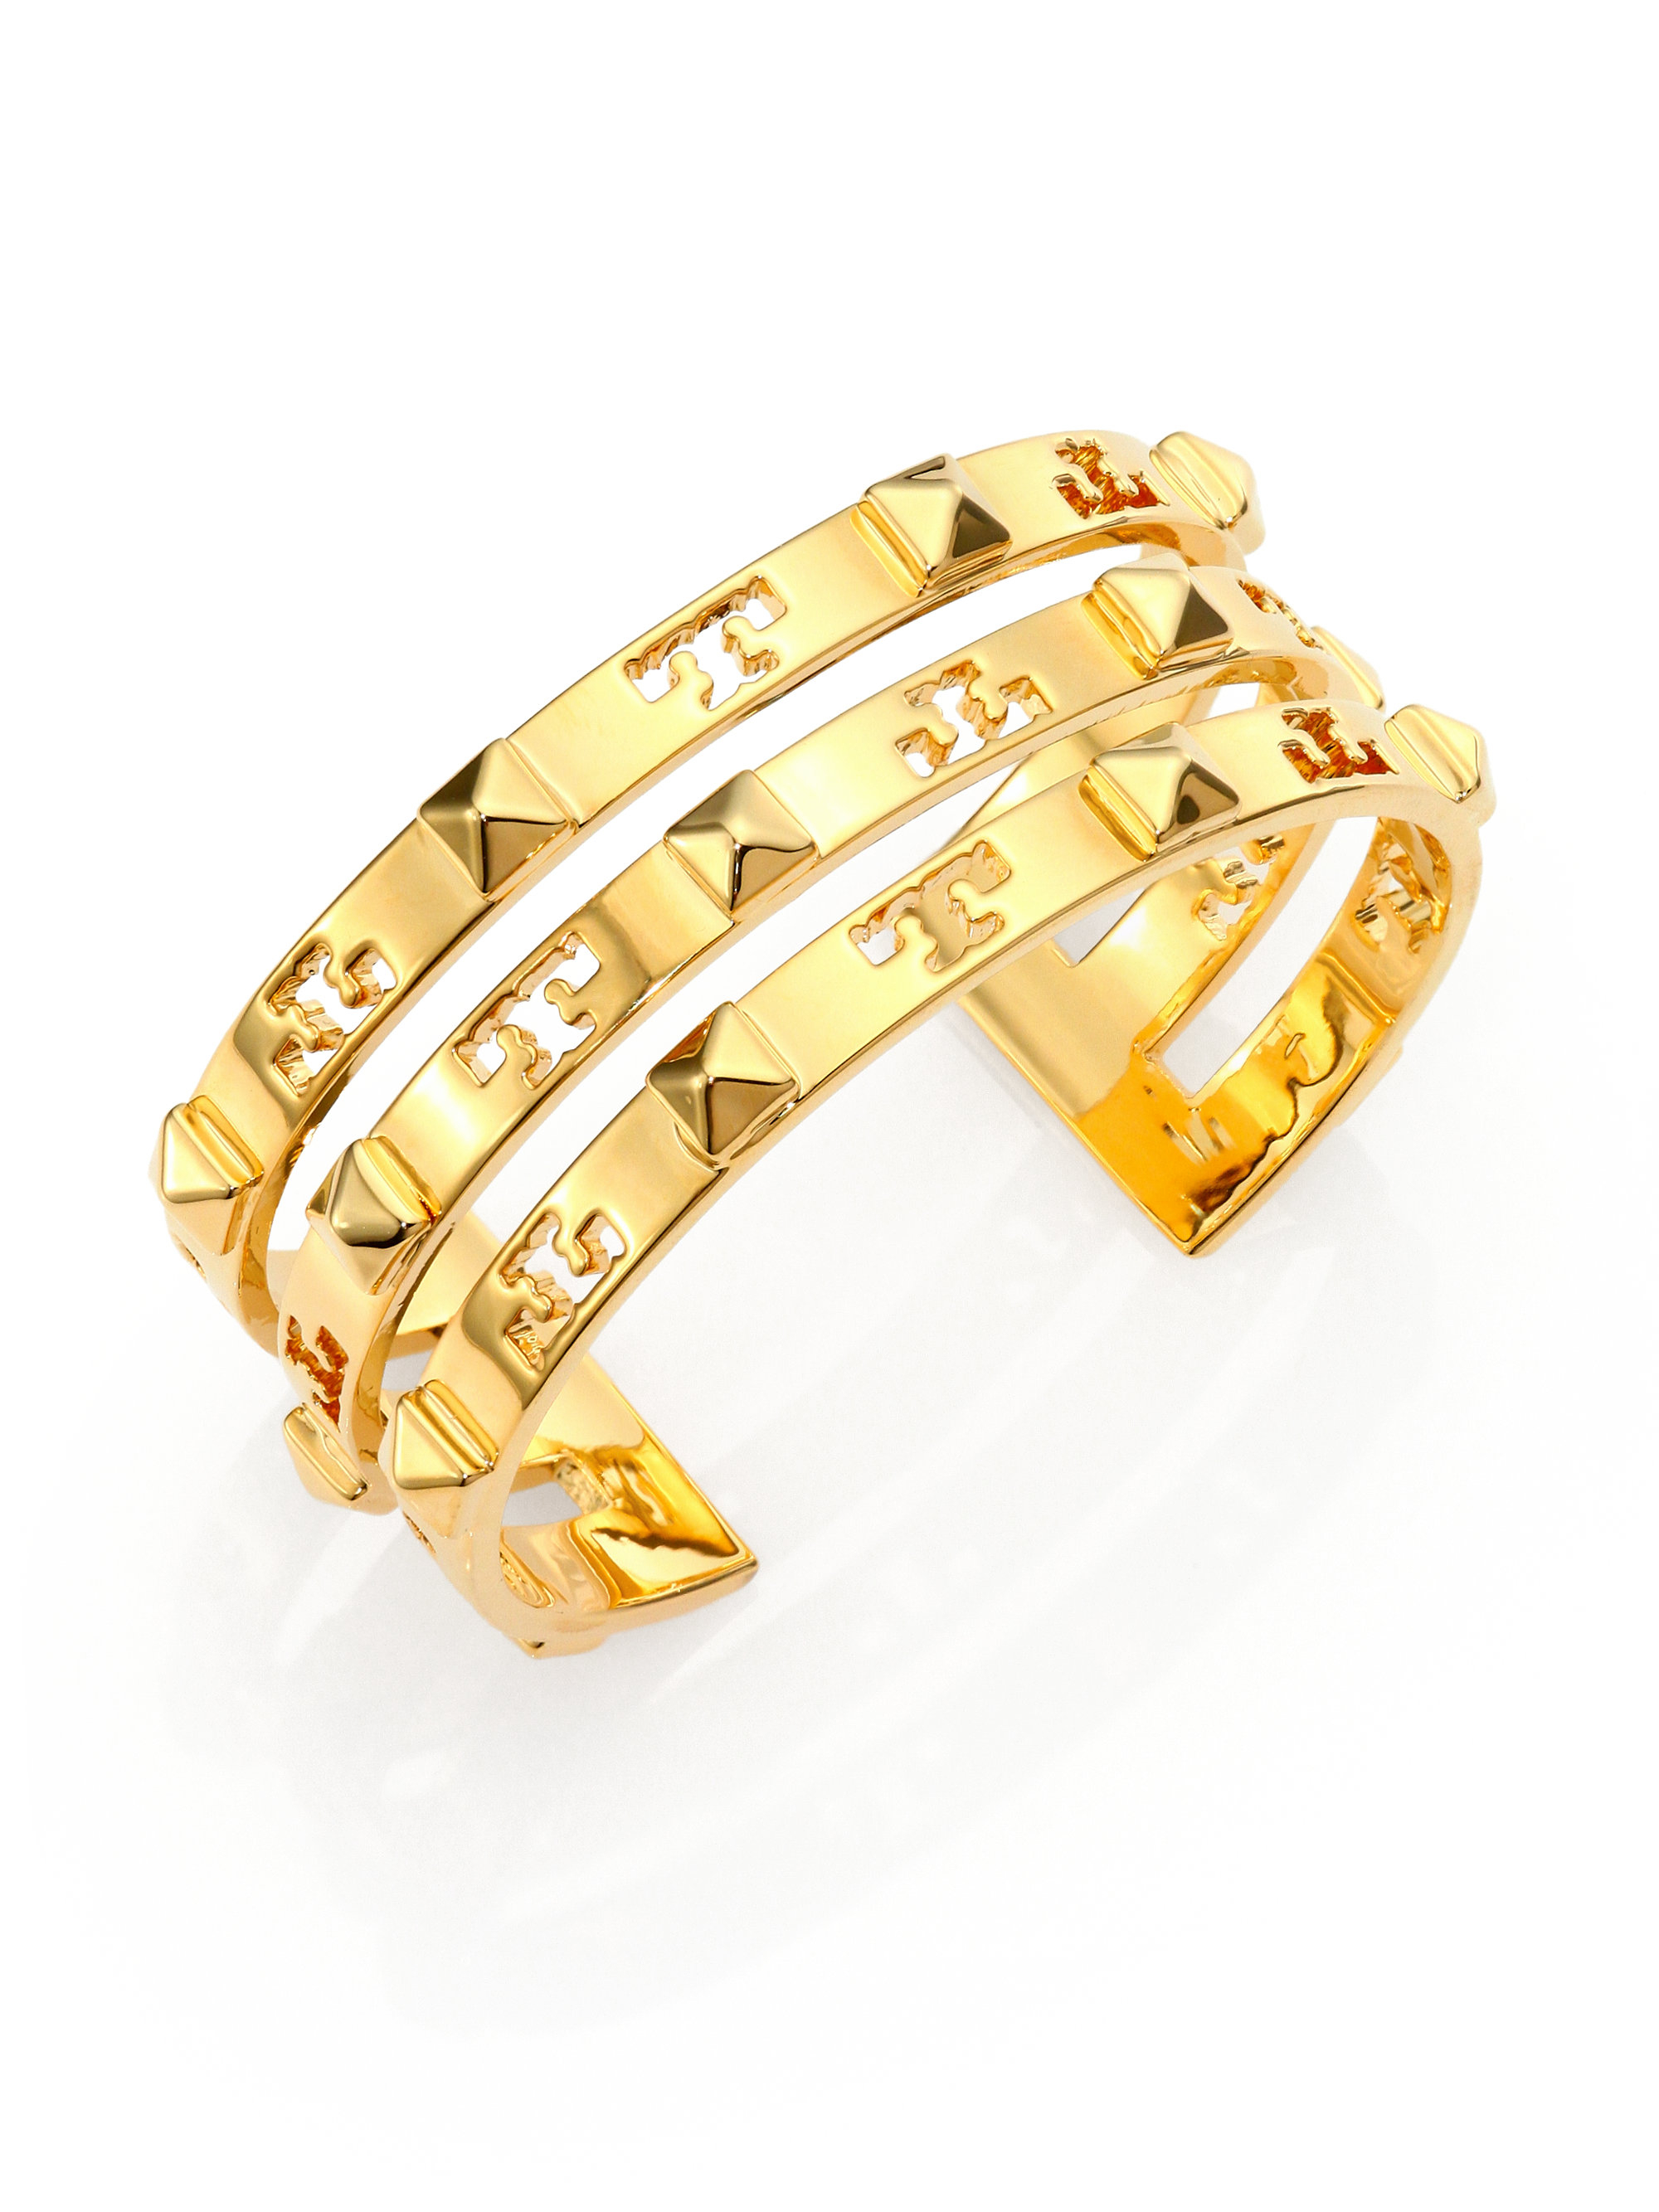 Tory Burch Stacked Logo Stud Cuff Bracelet in Shiny Gold (Metallic) - Lyst